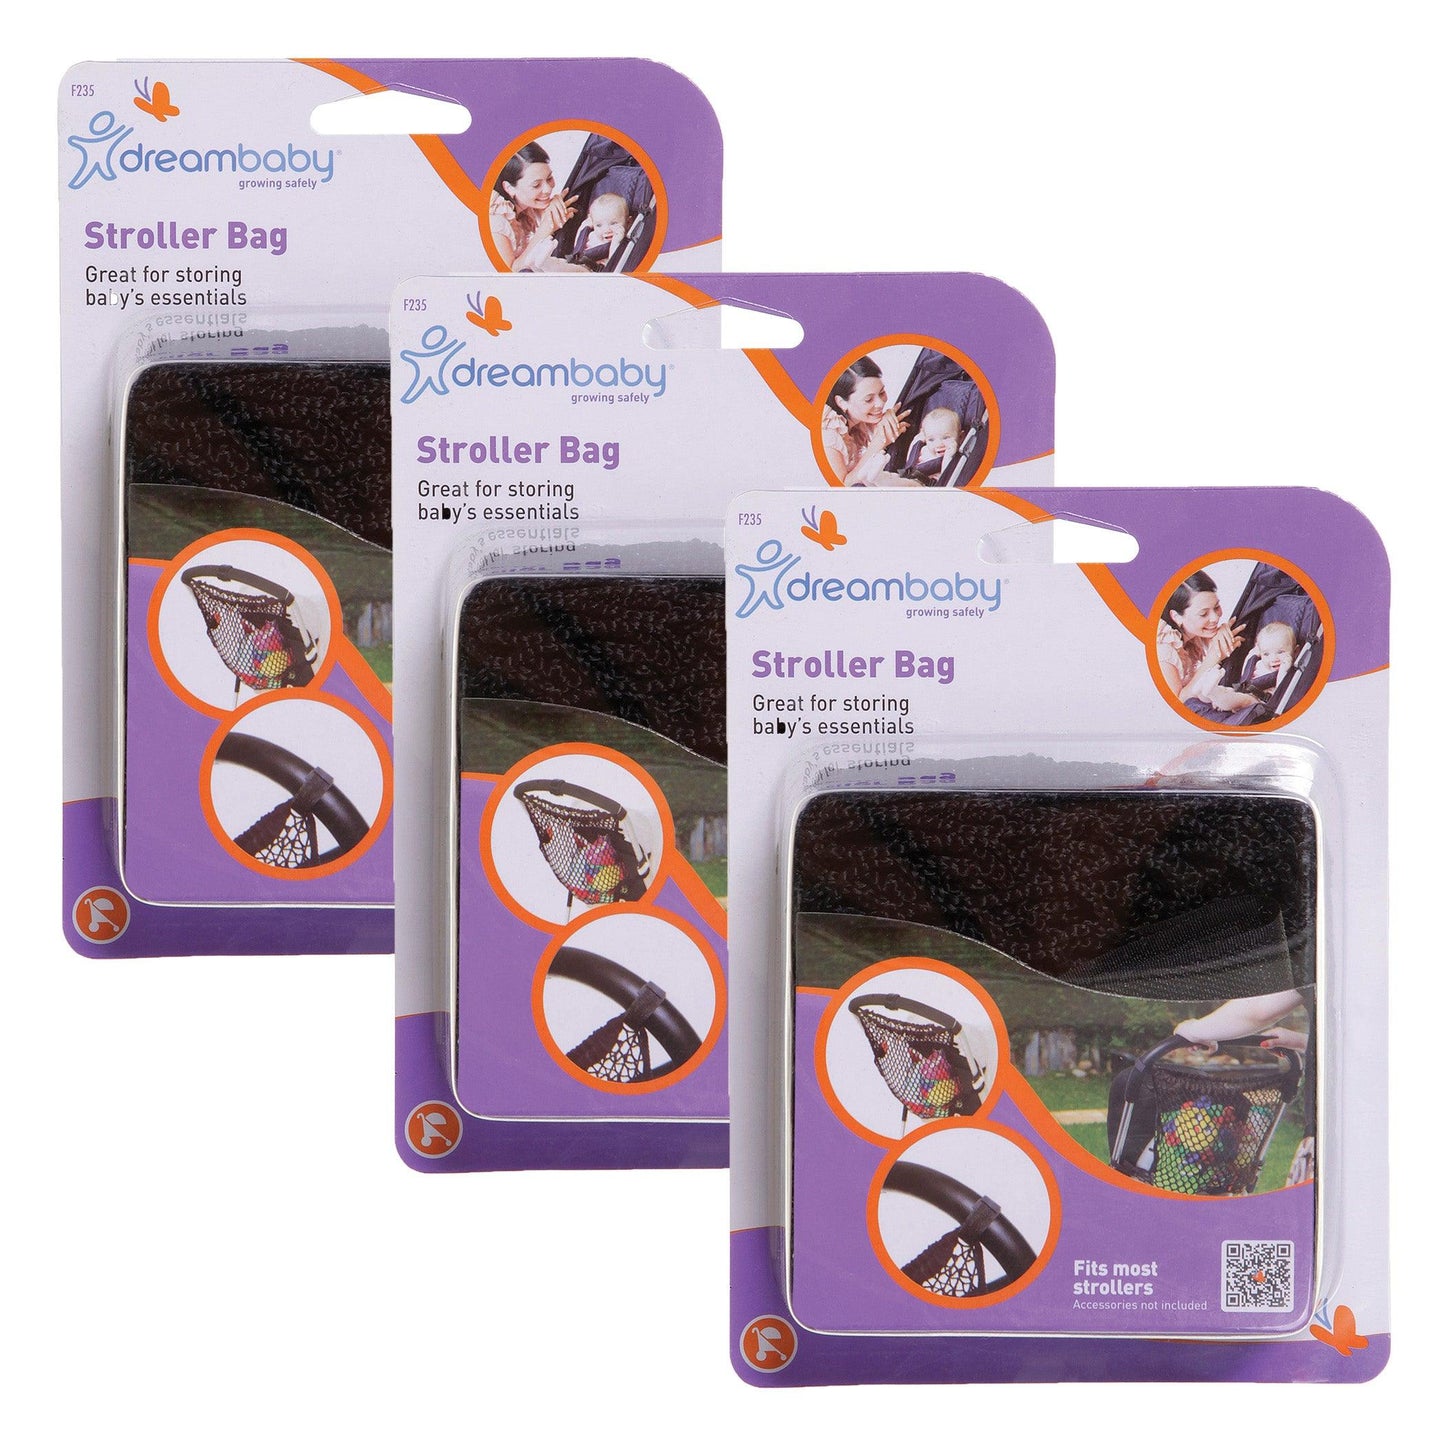 Strollerbuddy® Stroller Net Bag - Black Mesh, Pack of 3 - Loomini